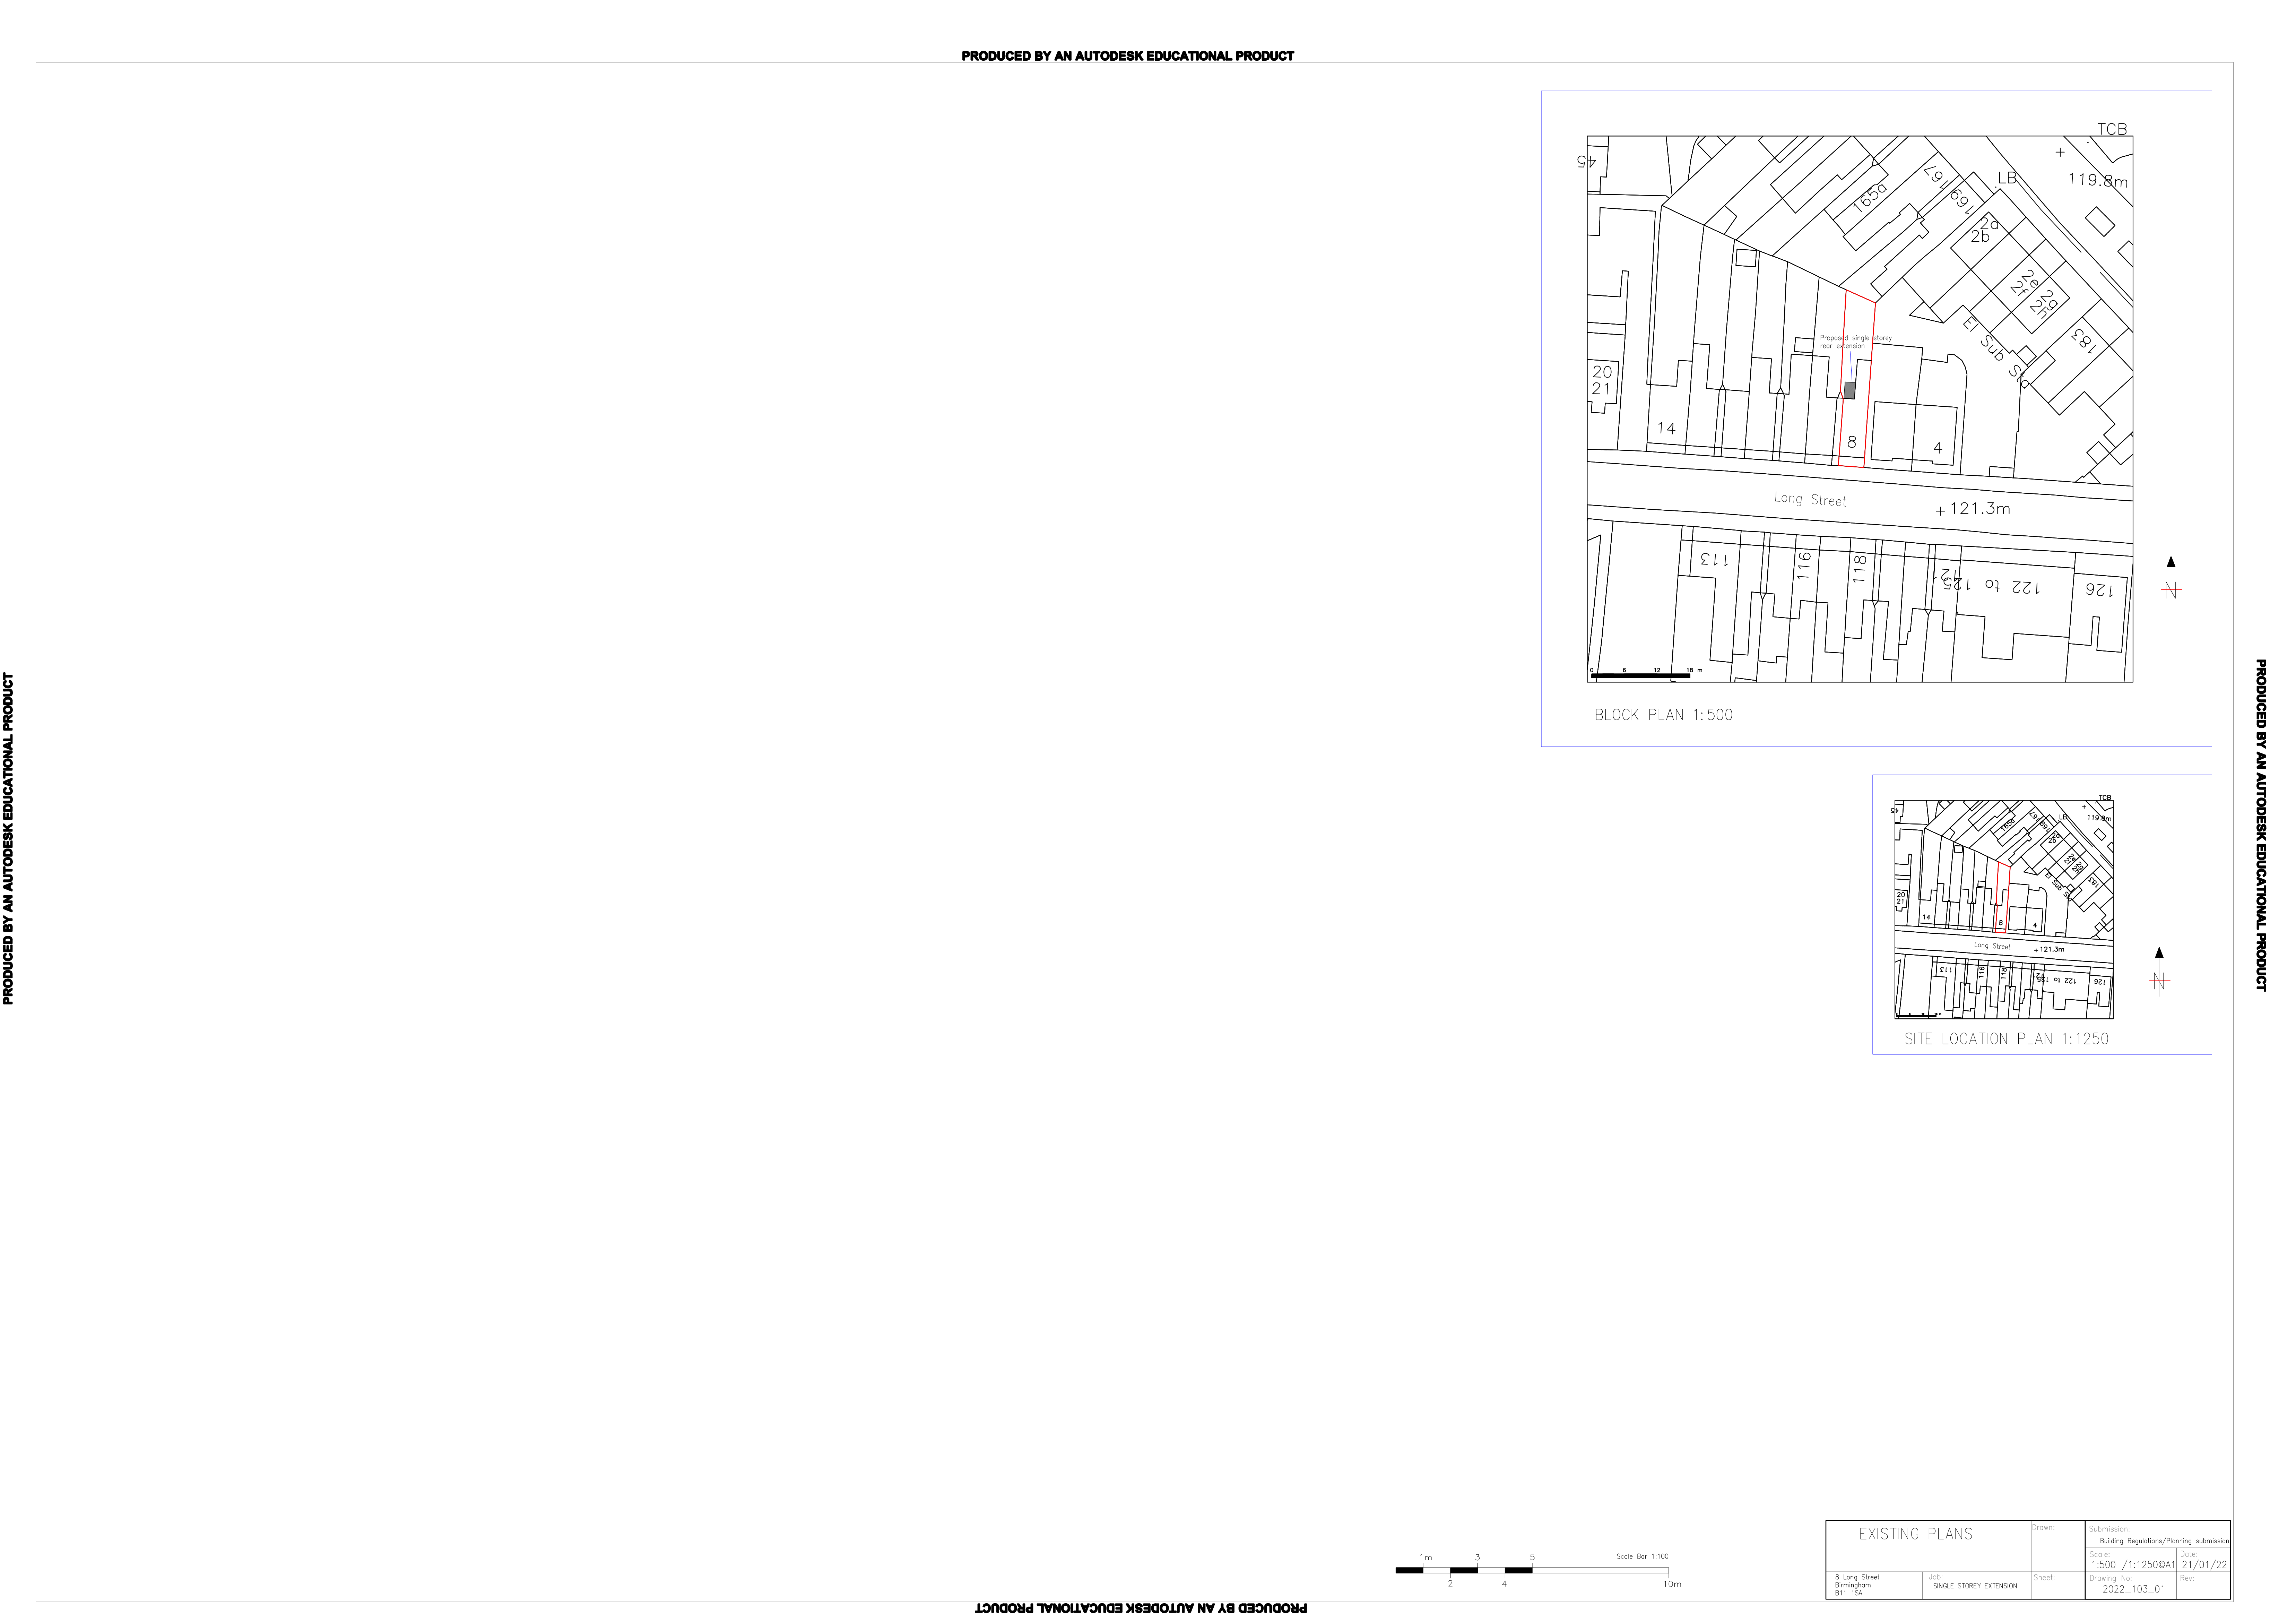 Example of Site Location Plan (1:1250) & Block Plan (1:500)